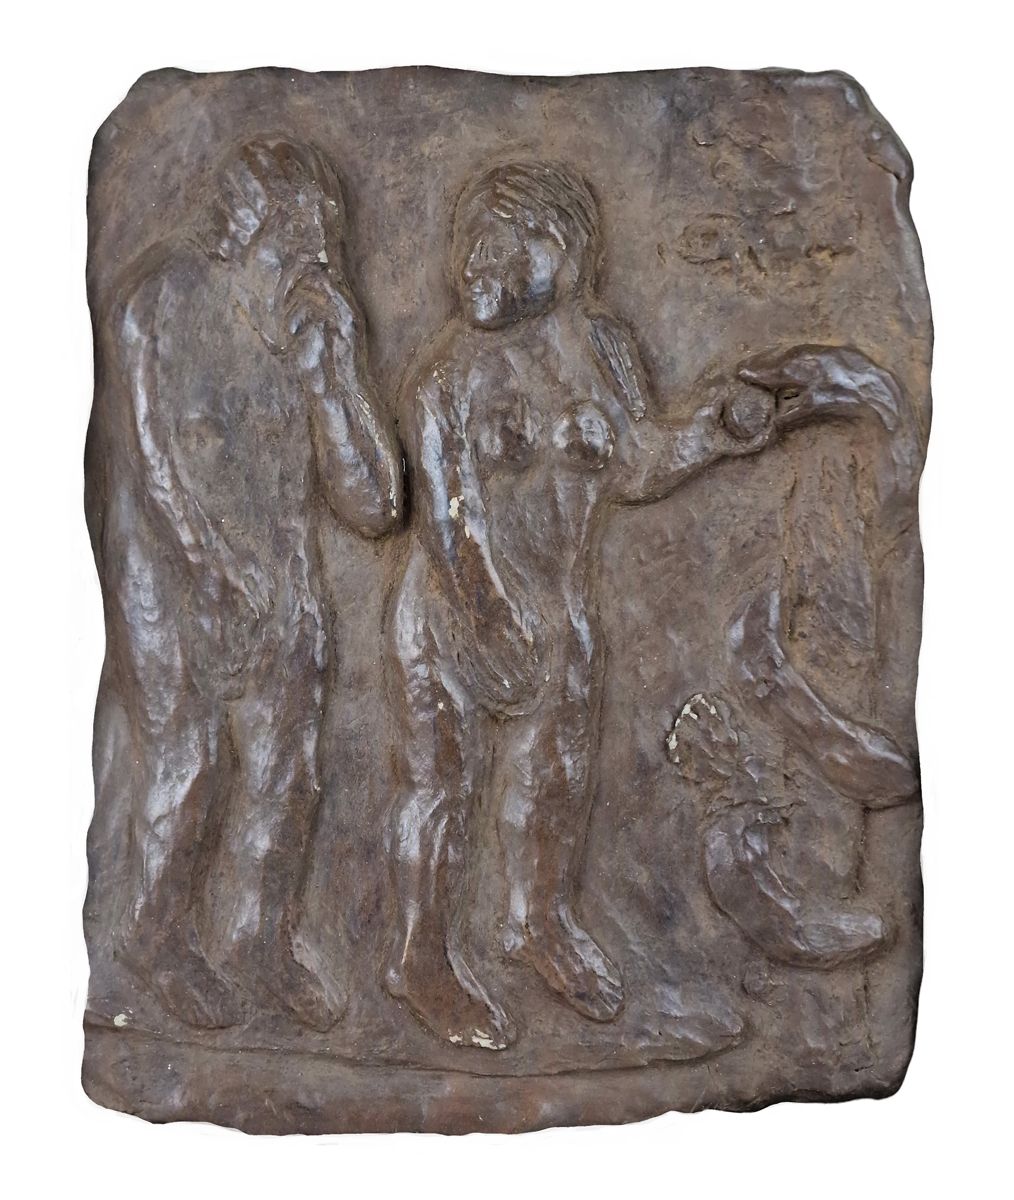 ANGELA SORMANI 20ème SIECLE 亚当和夏娃
陶器浮雕，带有棕色铜锈。 
尺寸：22 x 18.5厘米